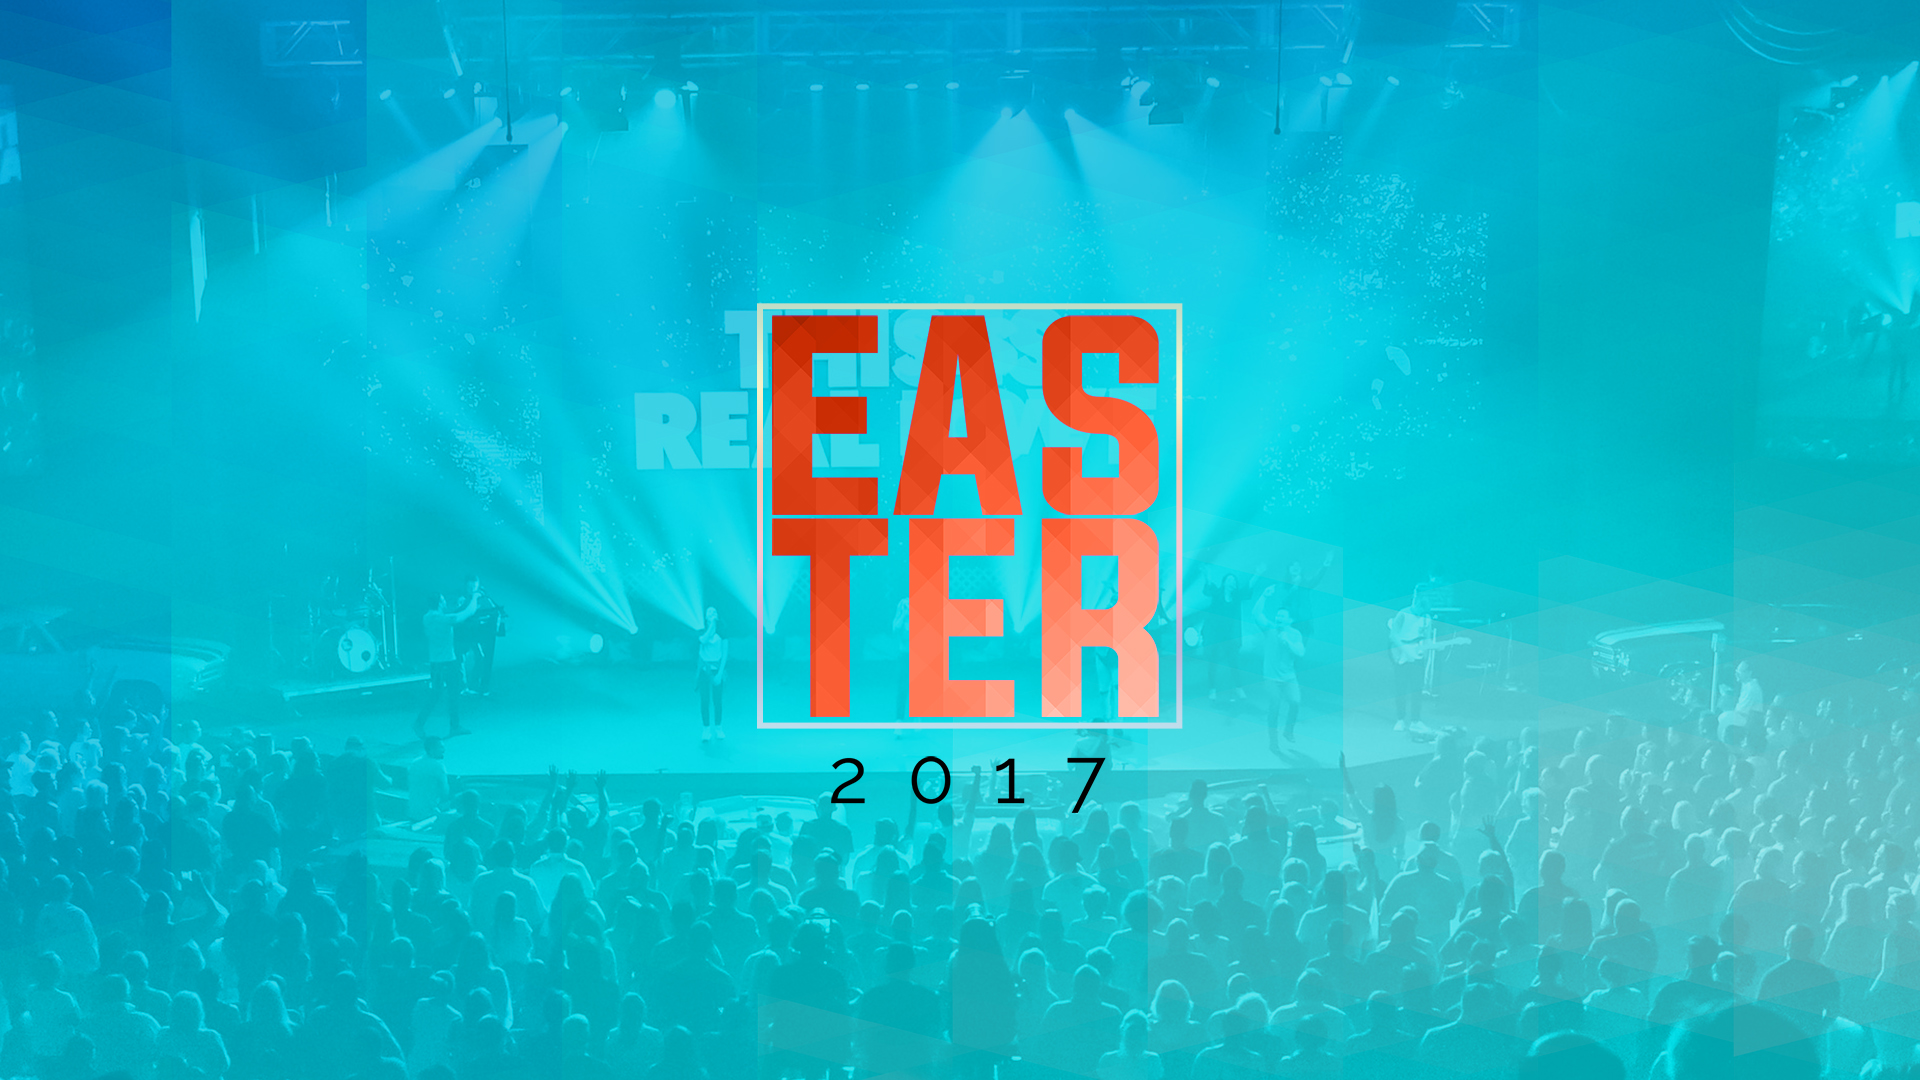  Easter 2017